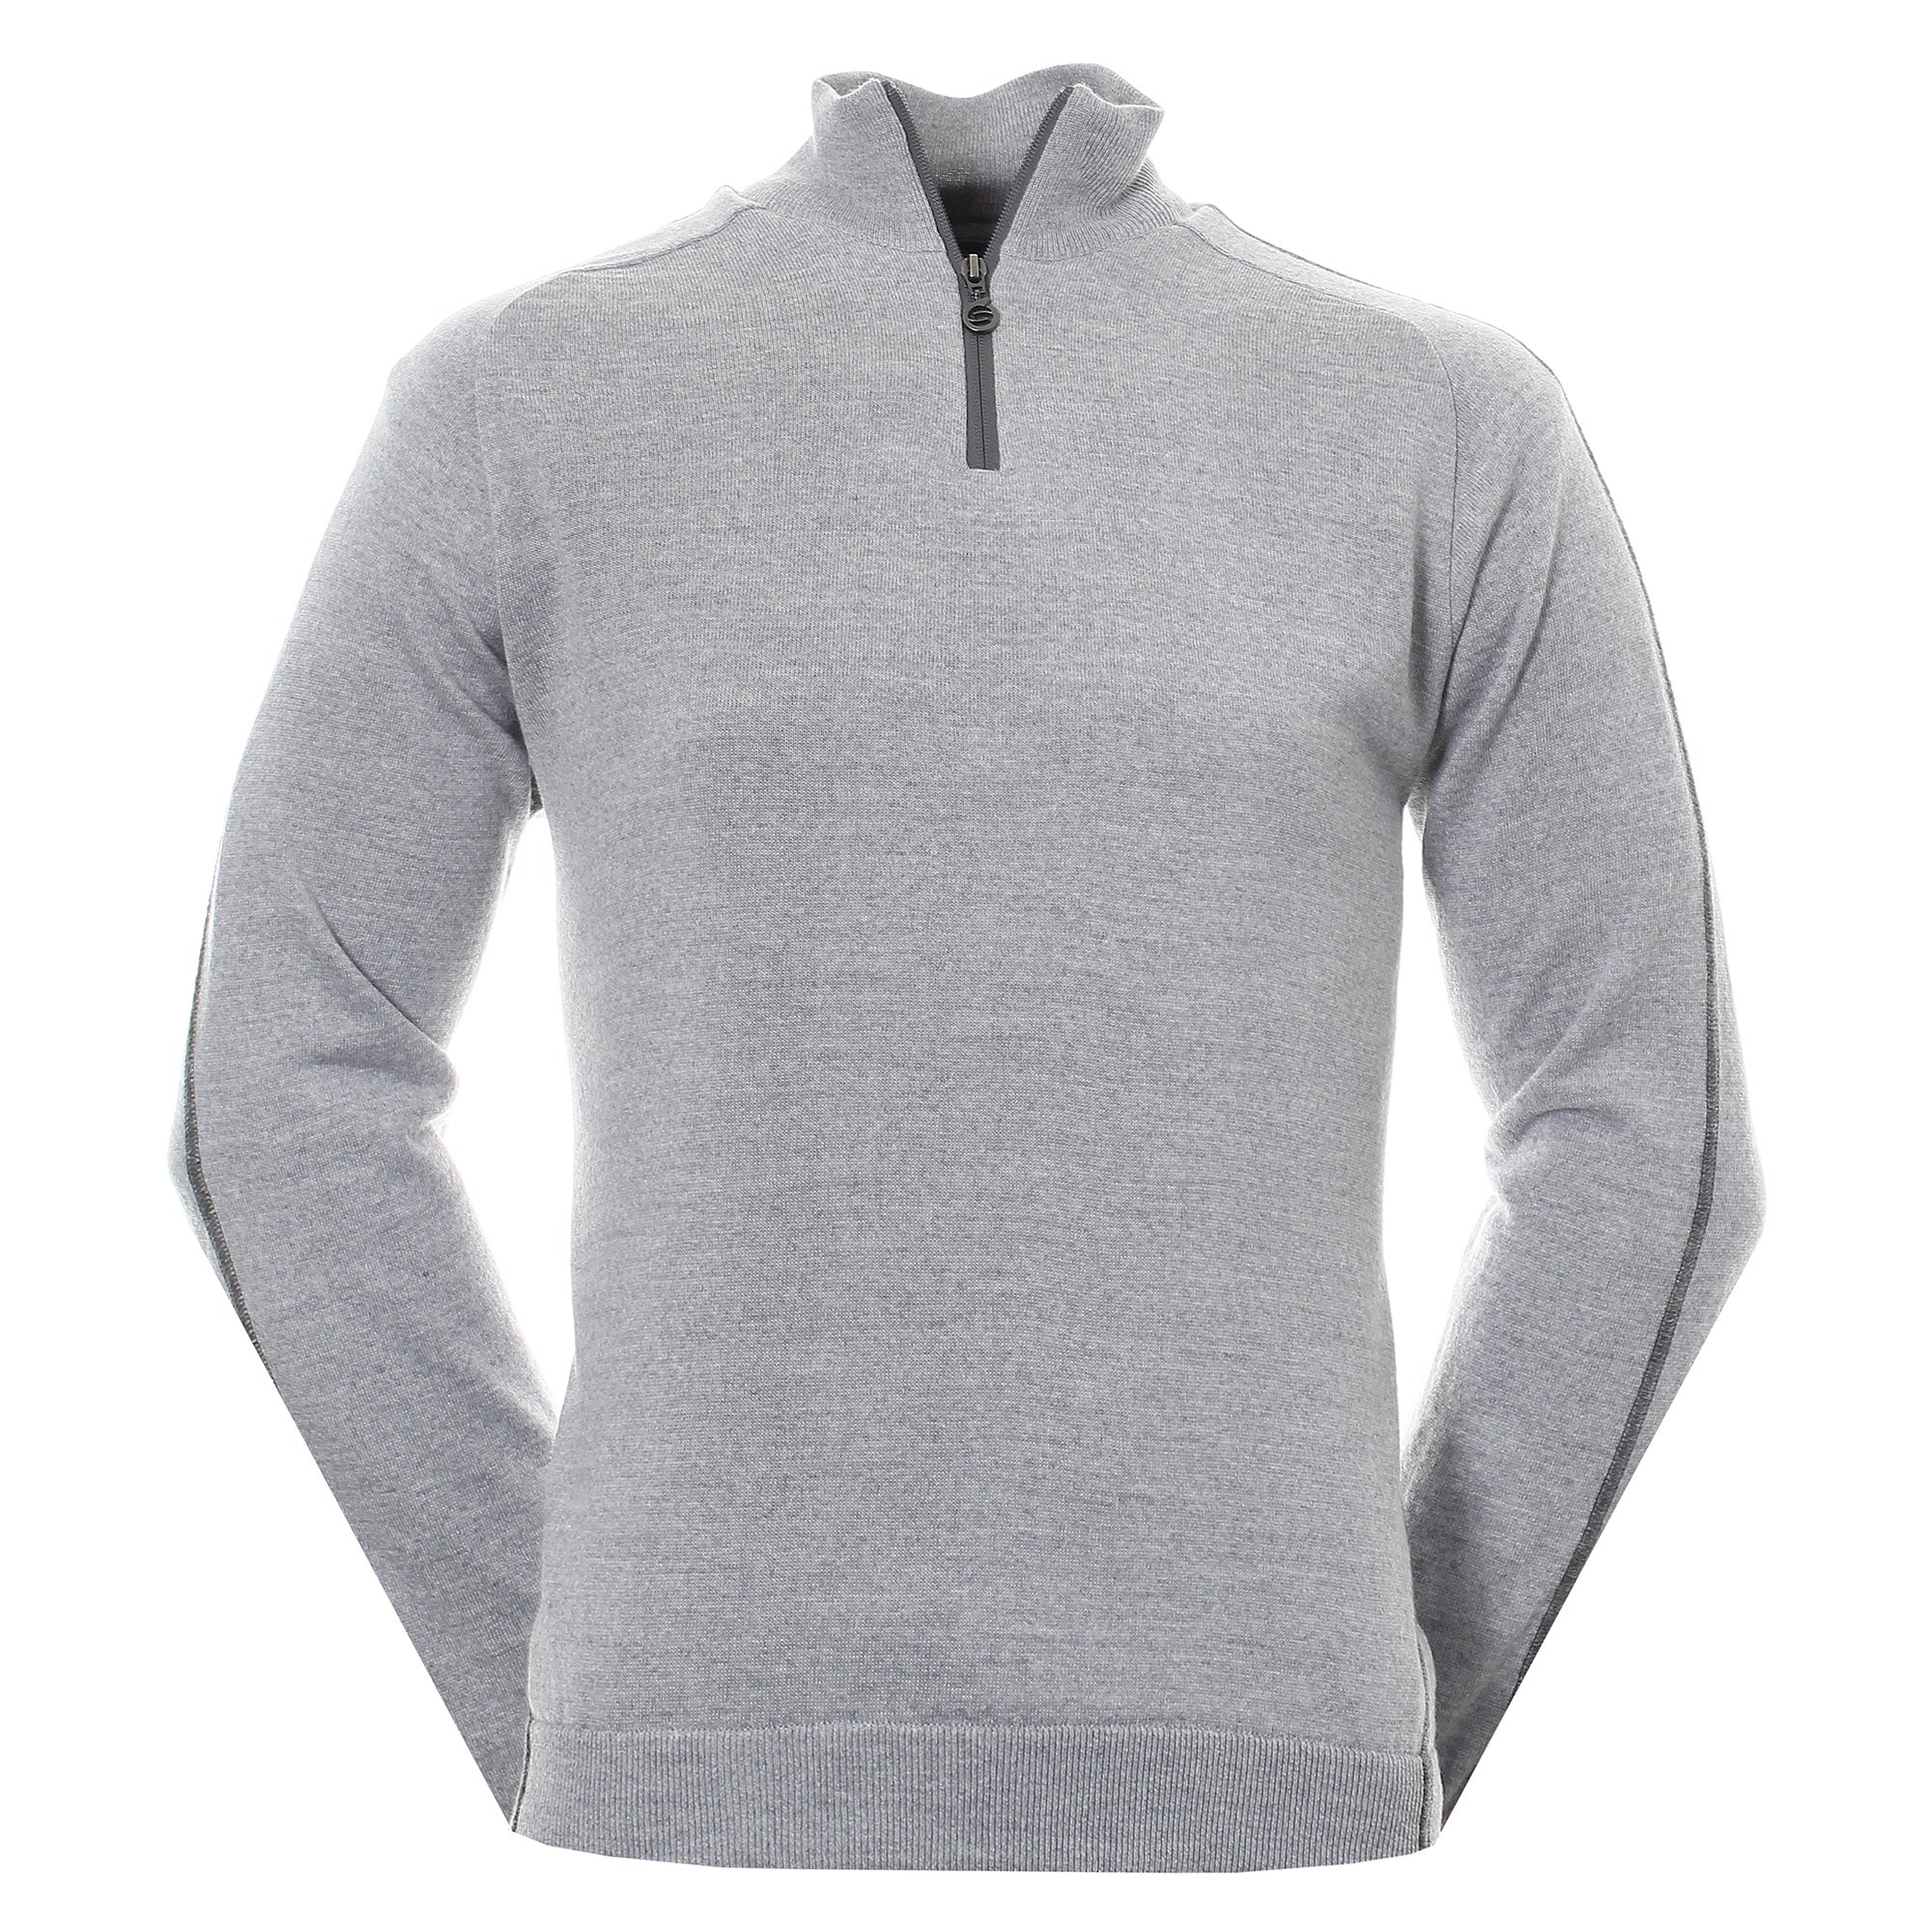 sunderland-golf-hamsin-lined-sweater-silver-gunmetal